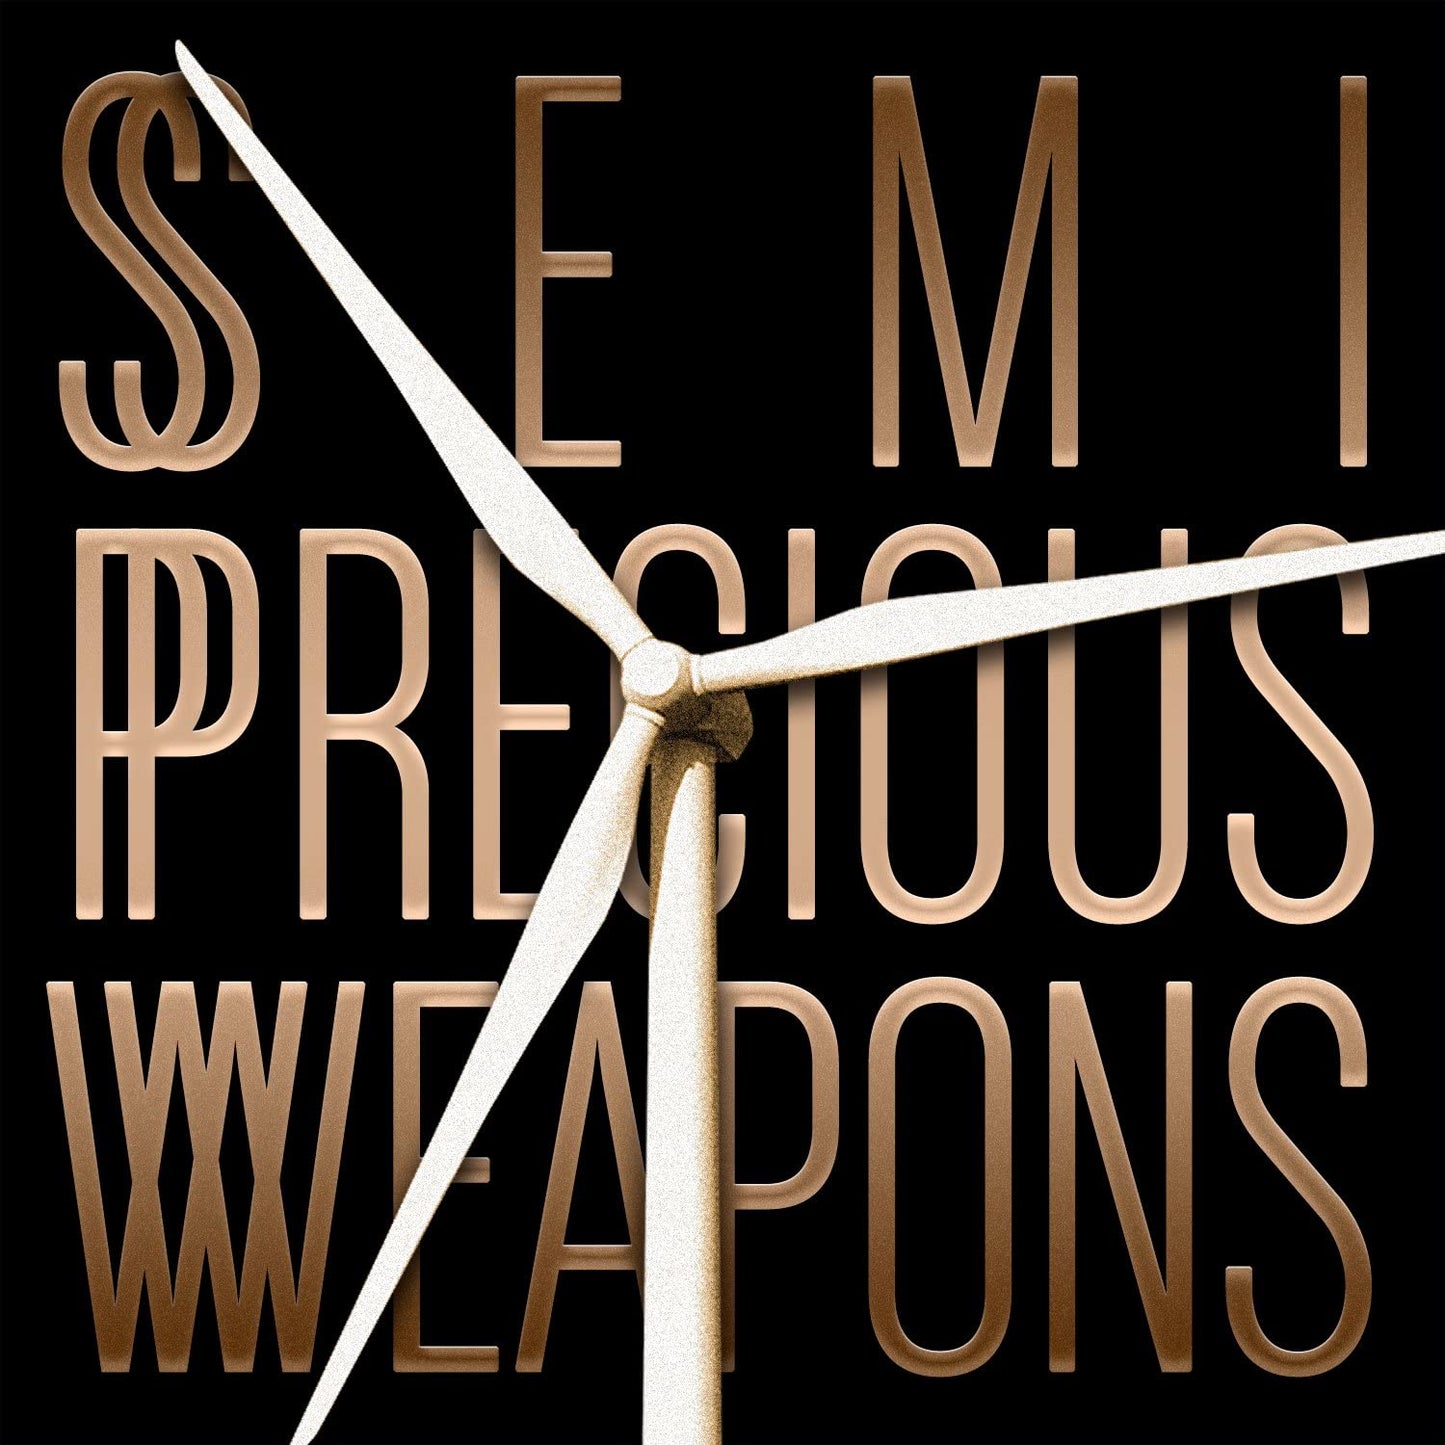 Semi Precious Weapons ‎– Aviation - USED CD